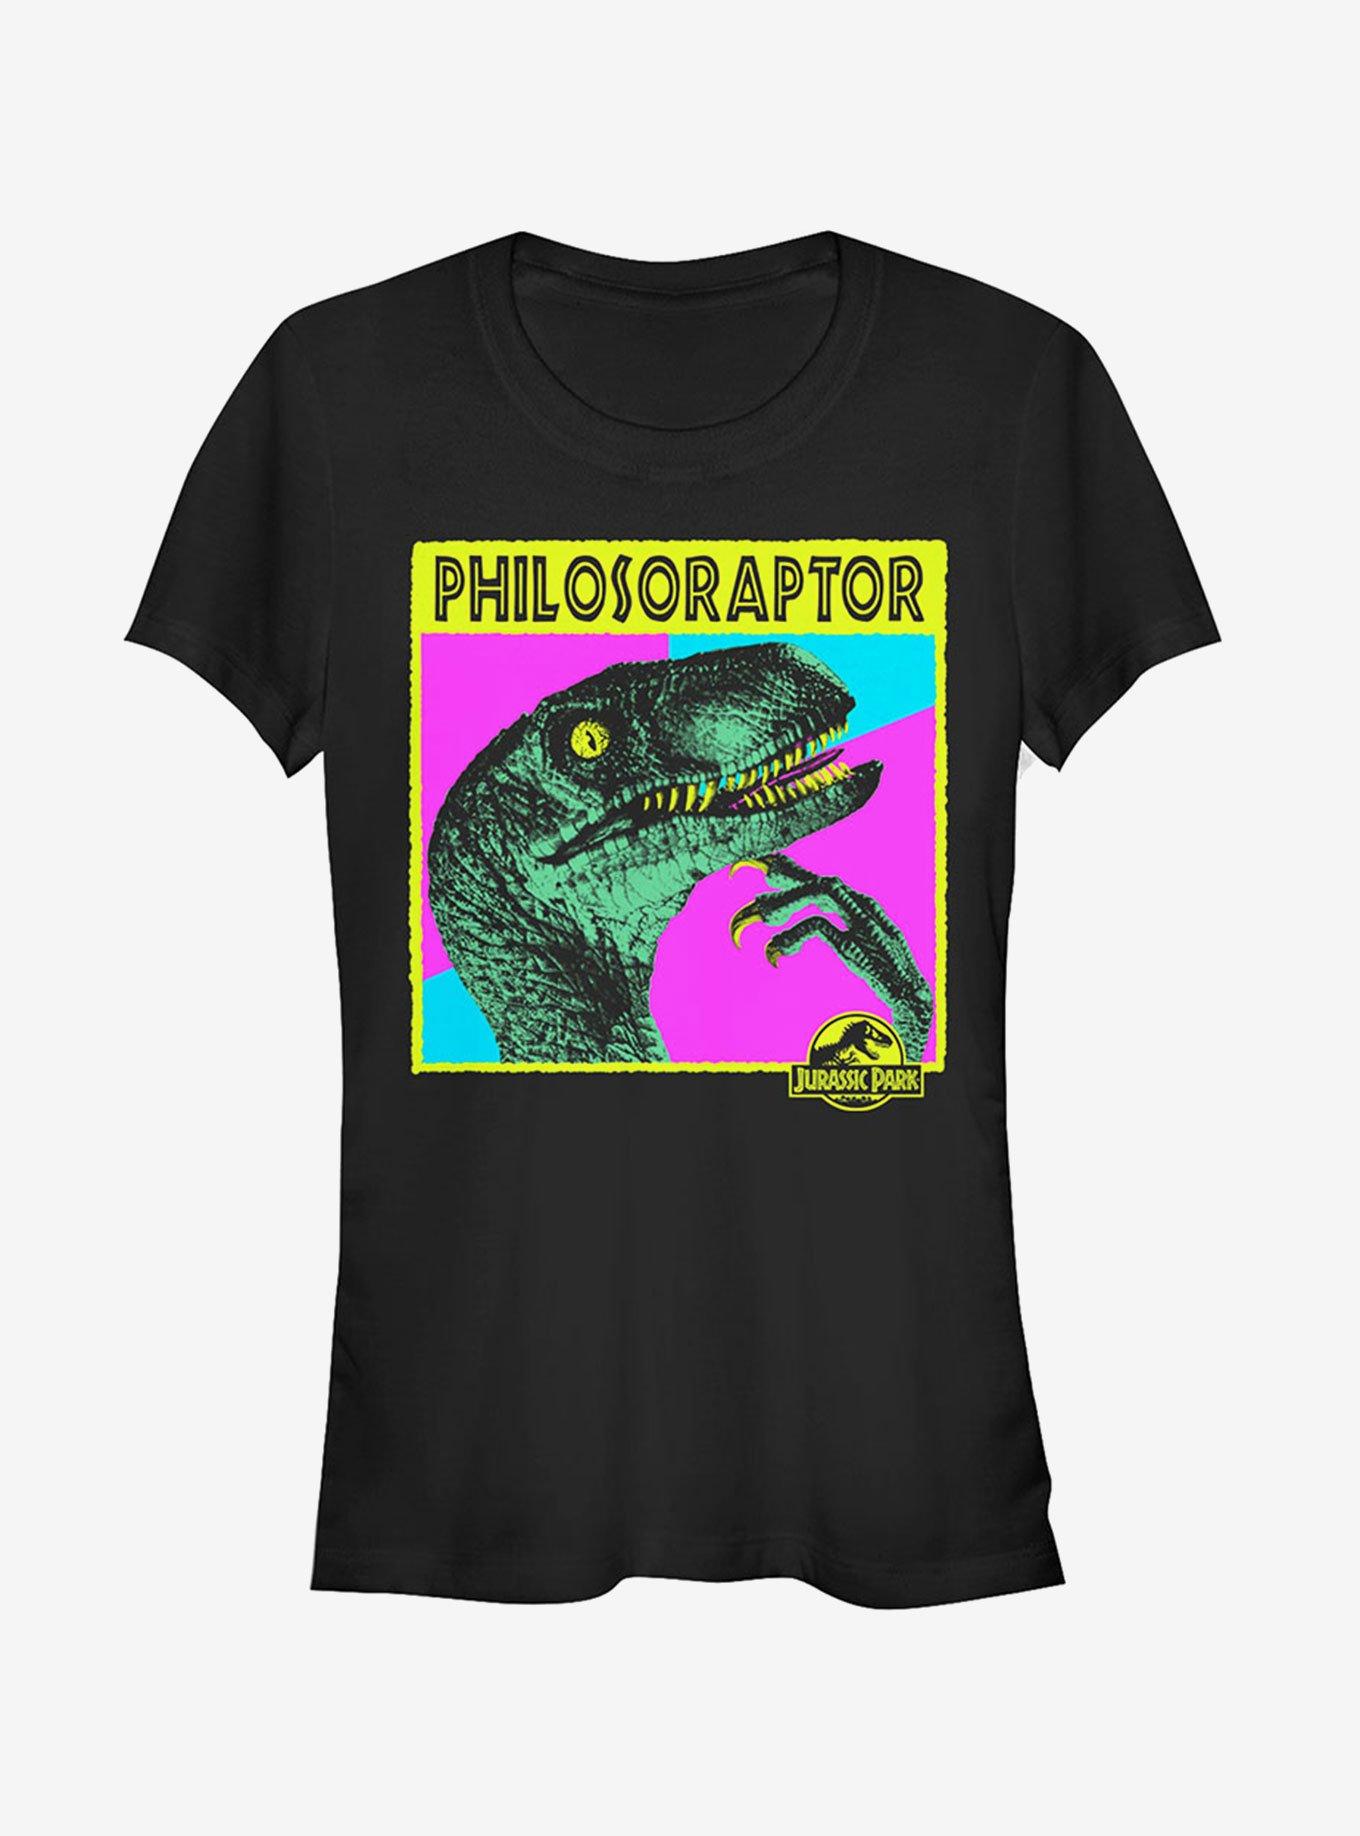 Philosoraptor Girls T-Shirt, BLACK, hi-res